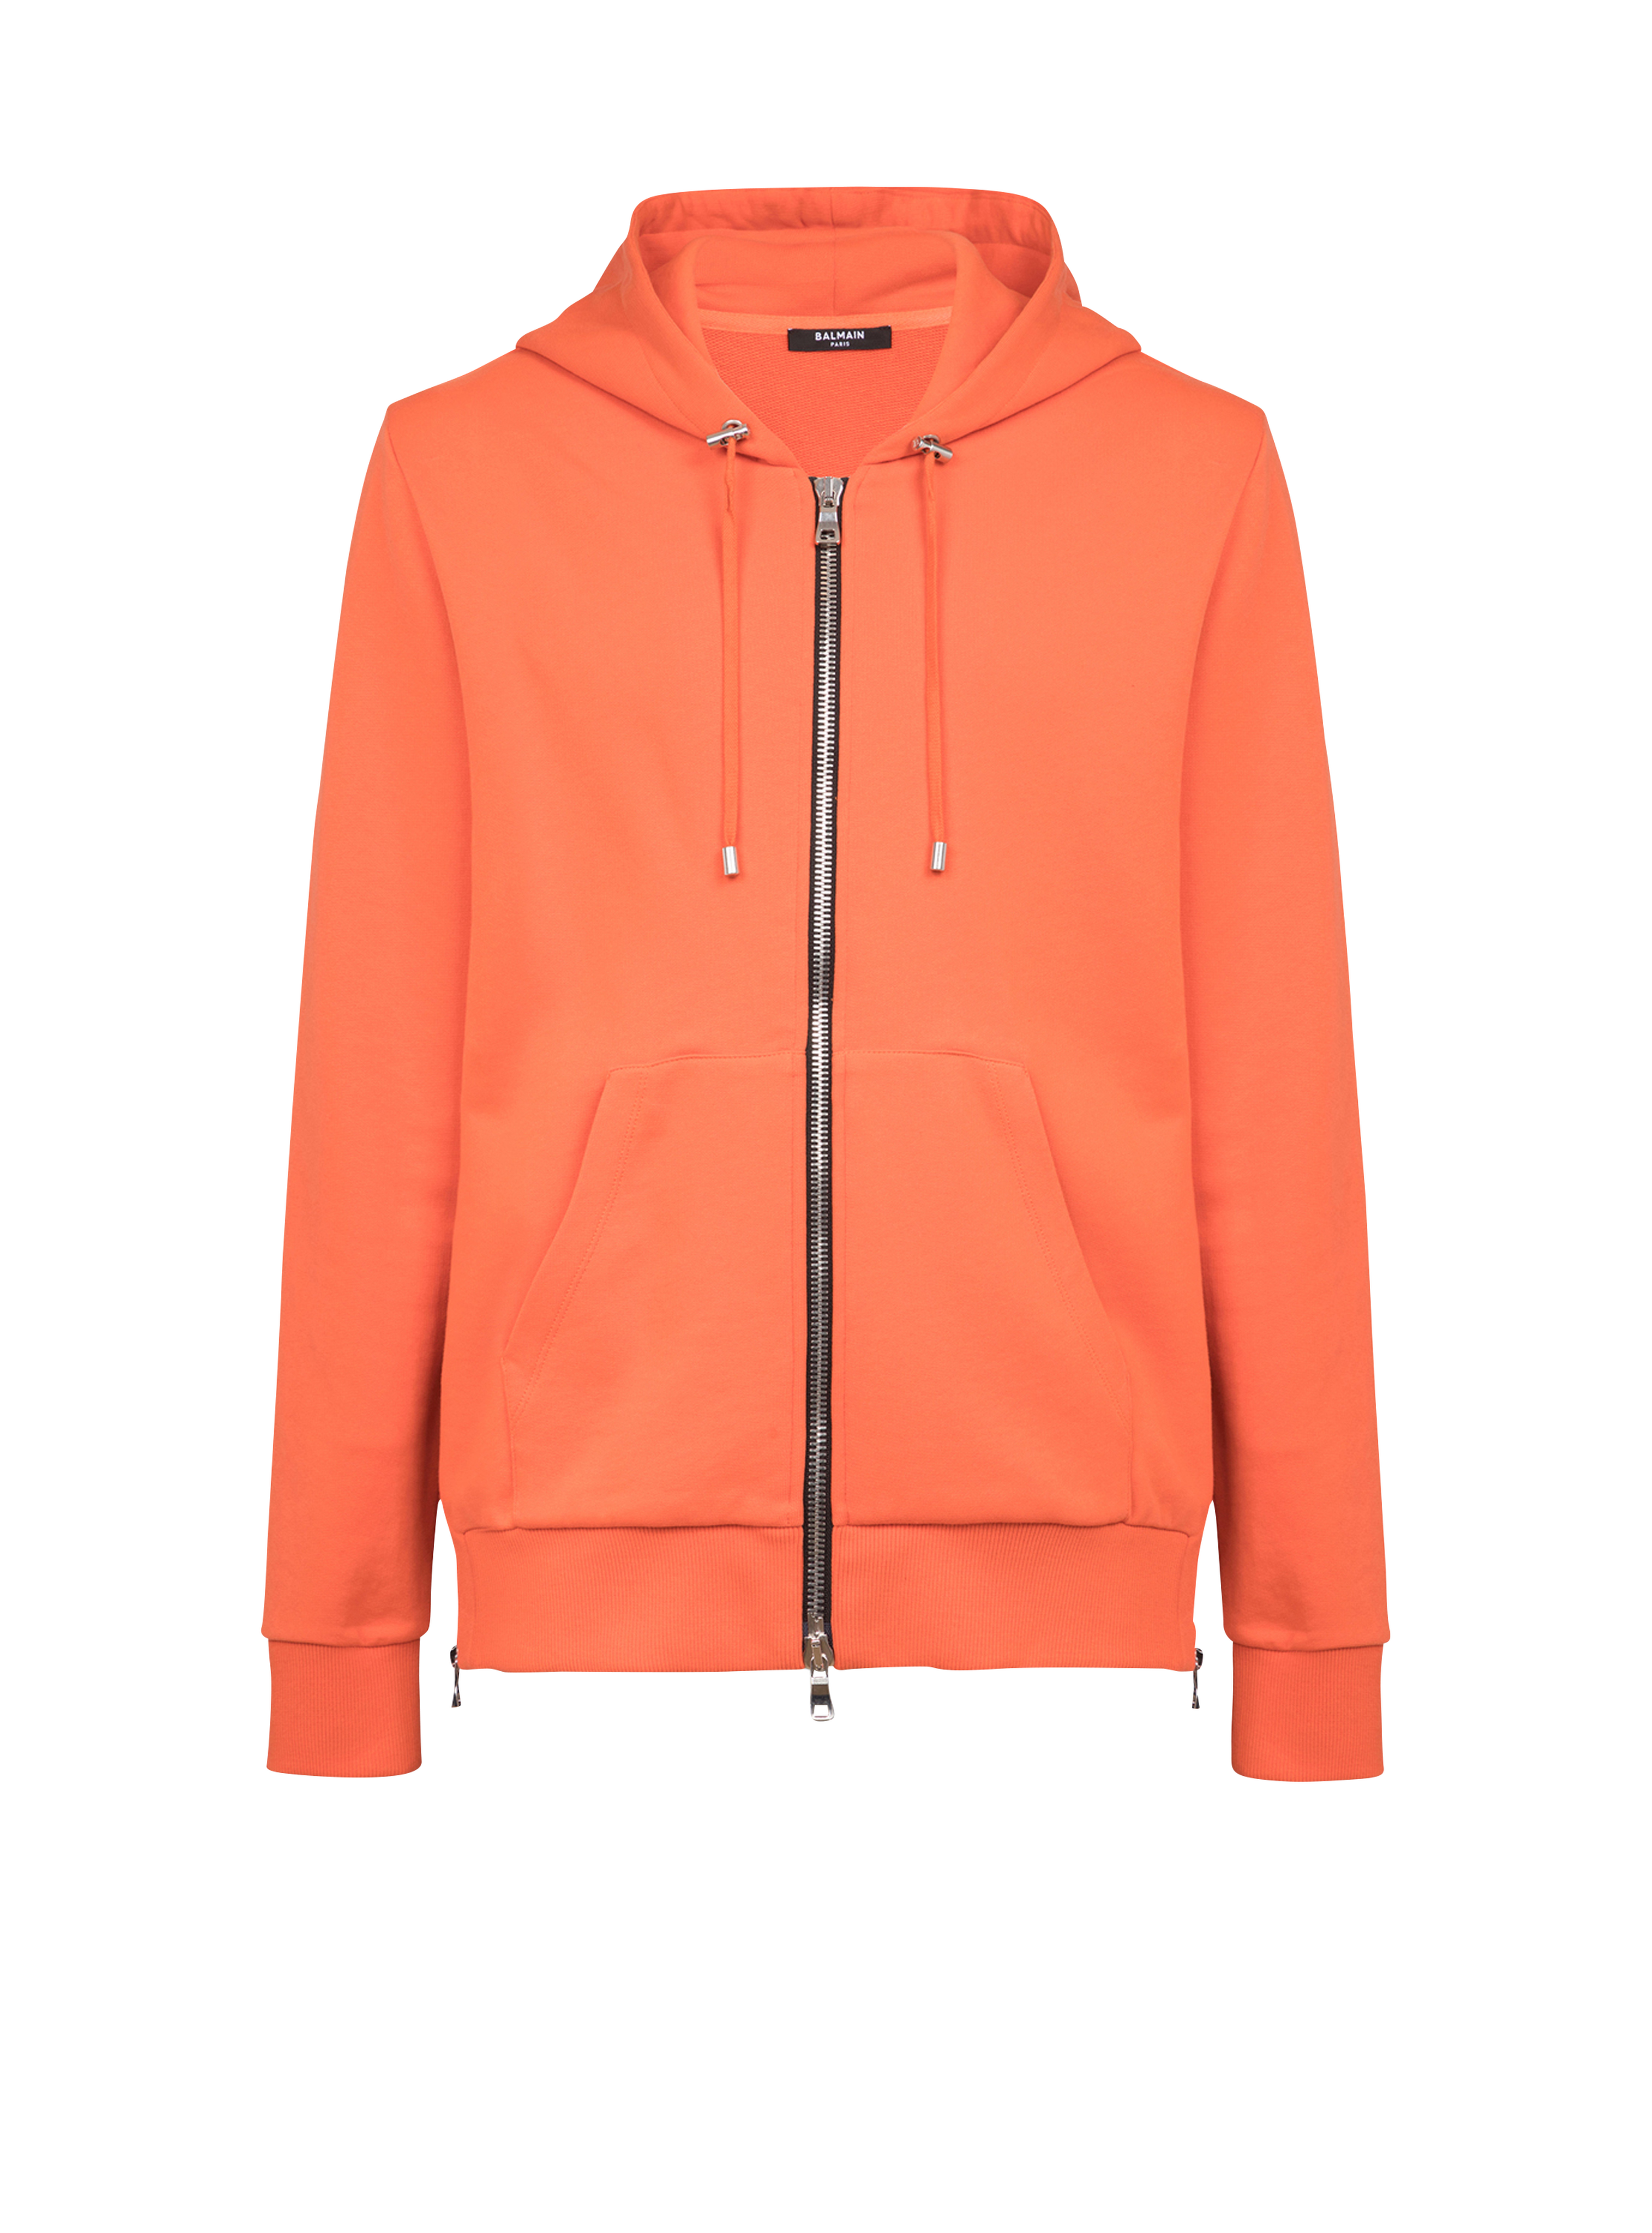 Eco-designed cotton sweatshirt with Balmain logo print, orange